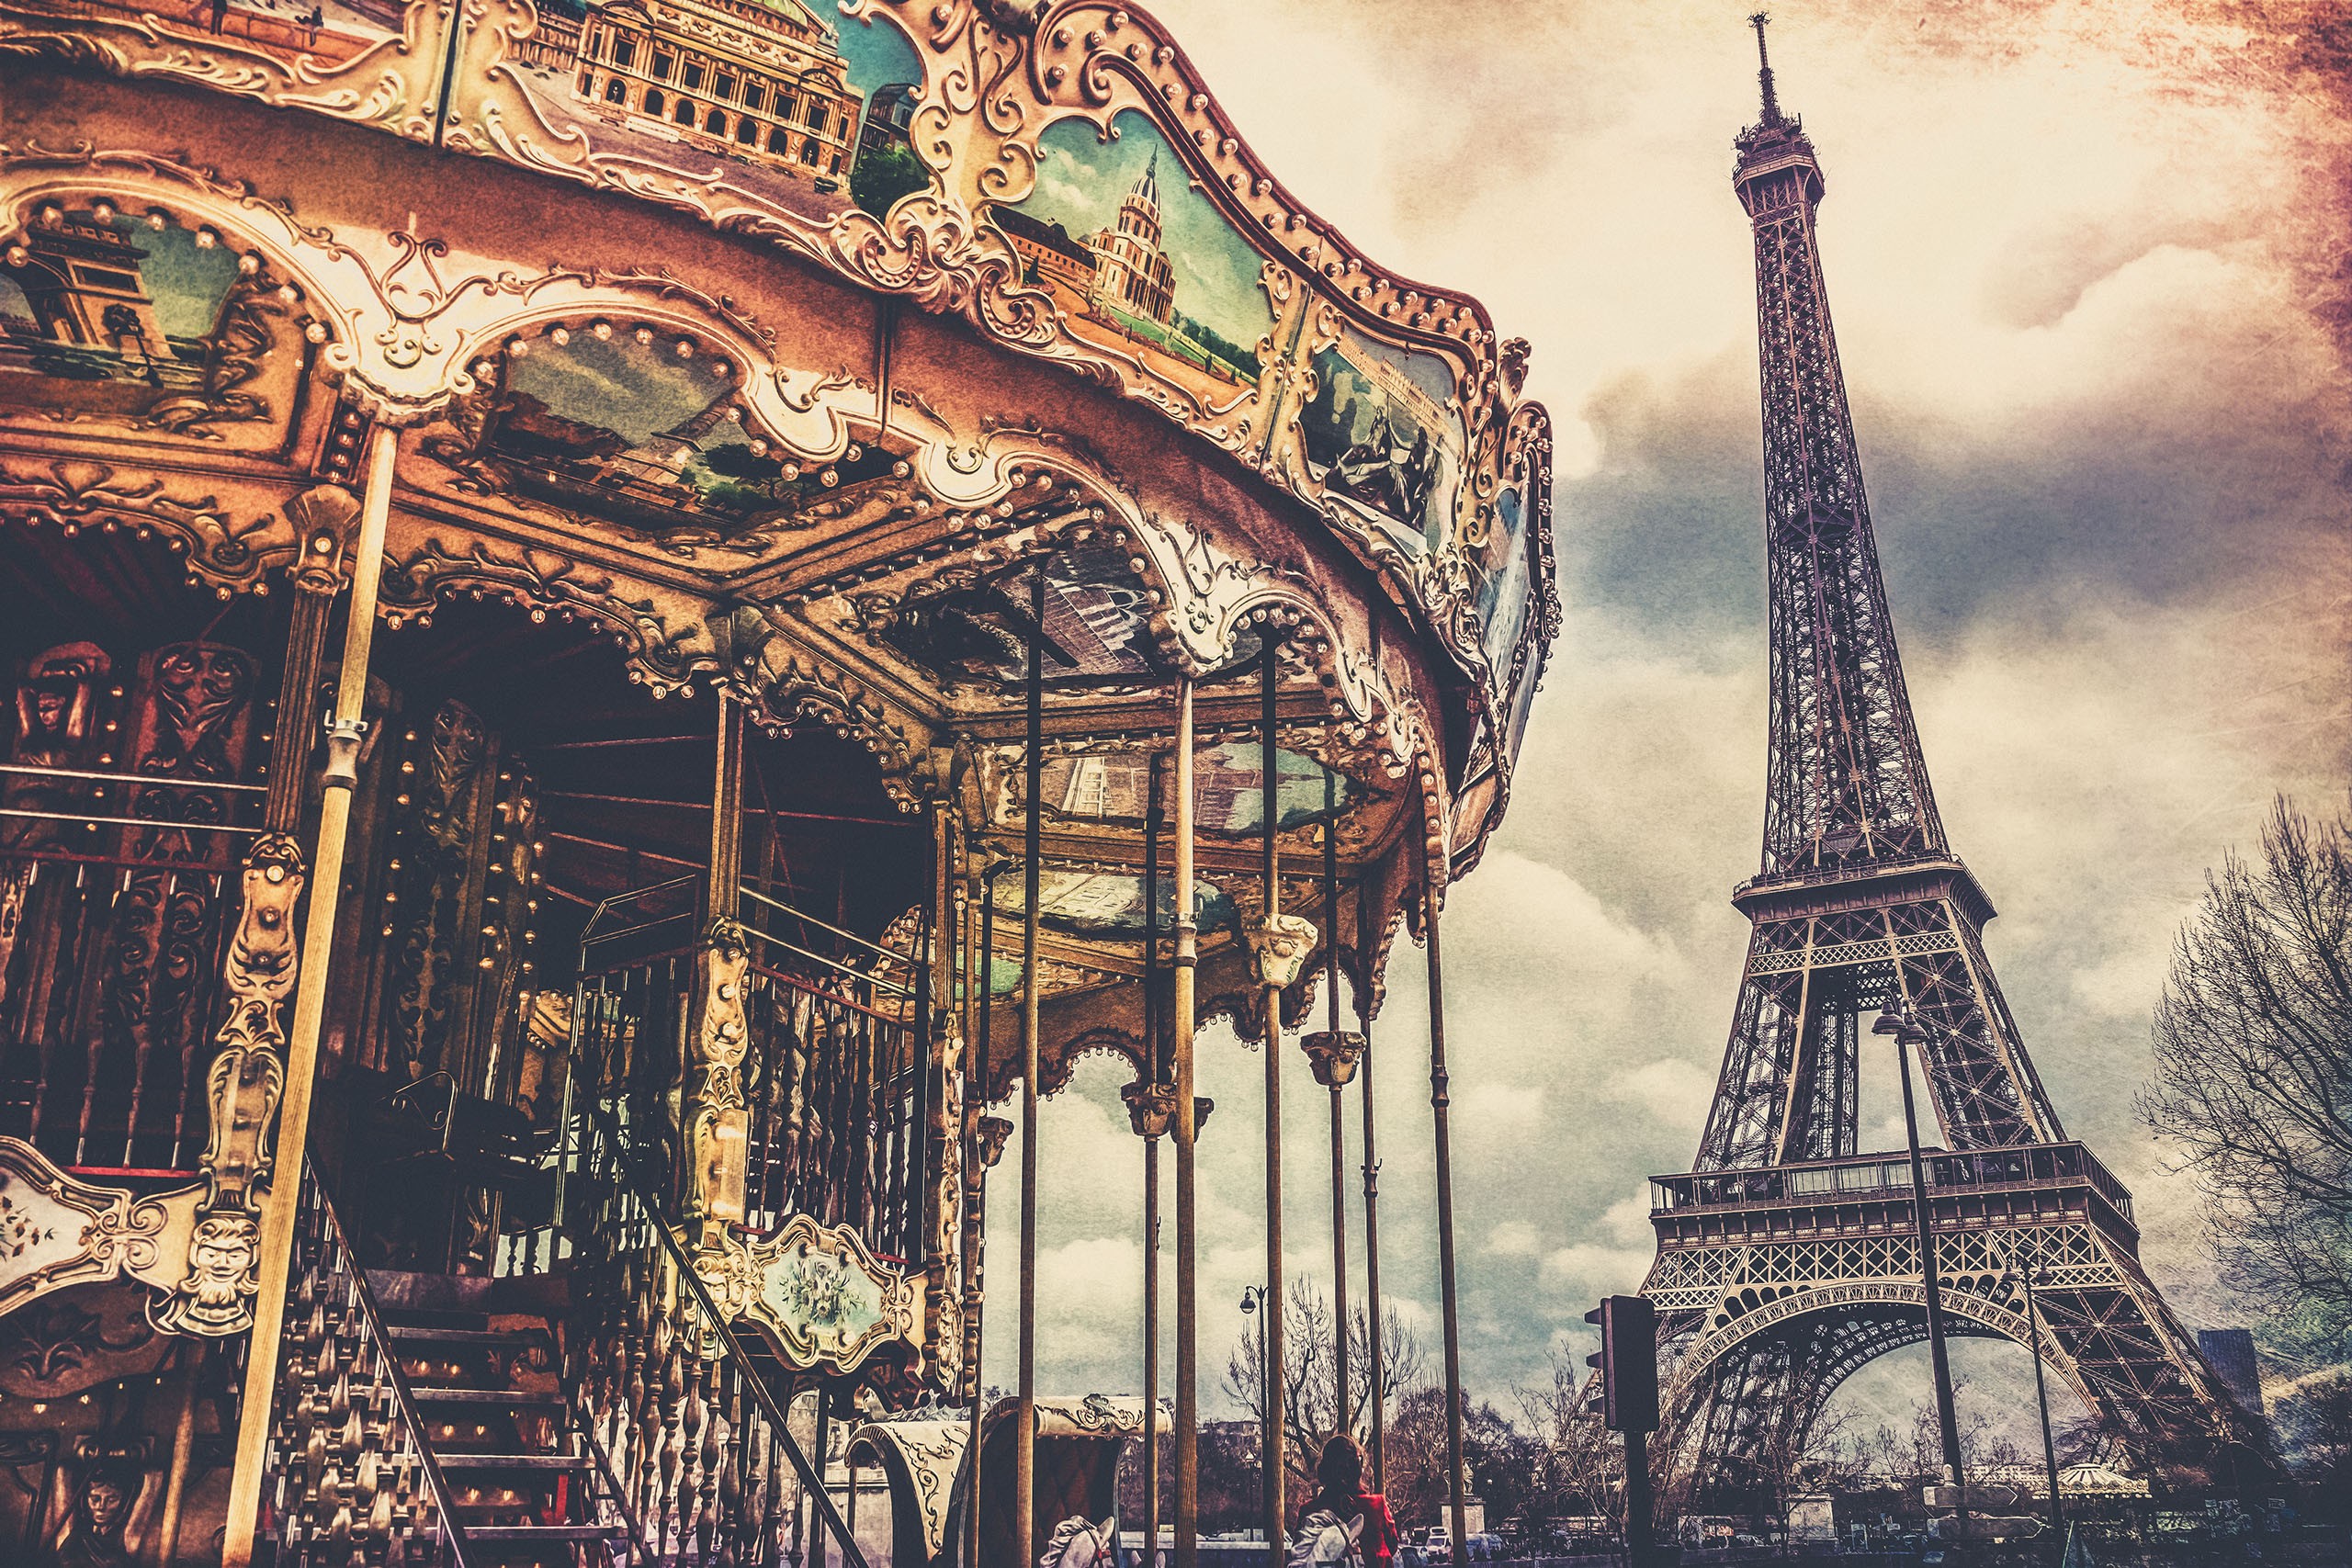 General 2560x1707 Paris Eiffel Tower carousels France theme parks landmark